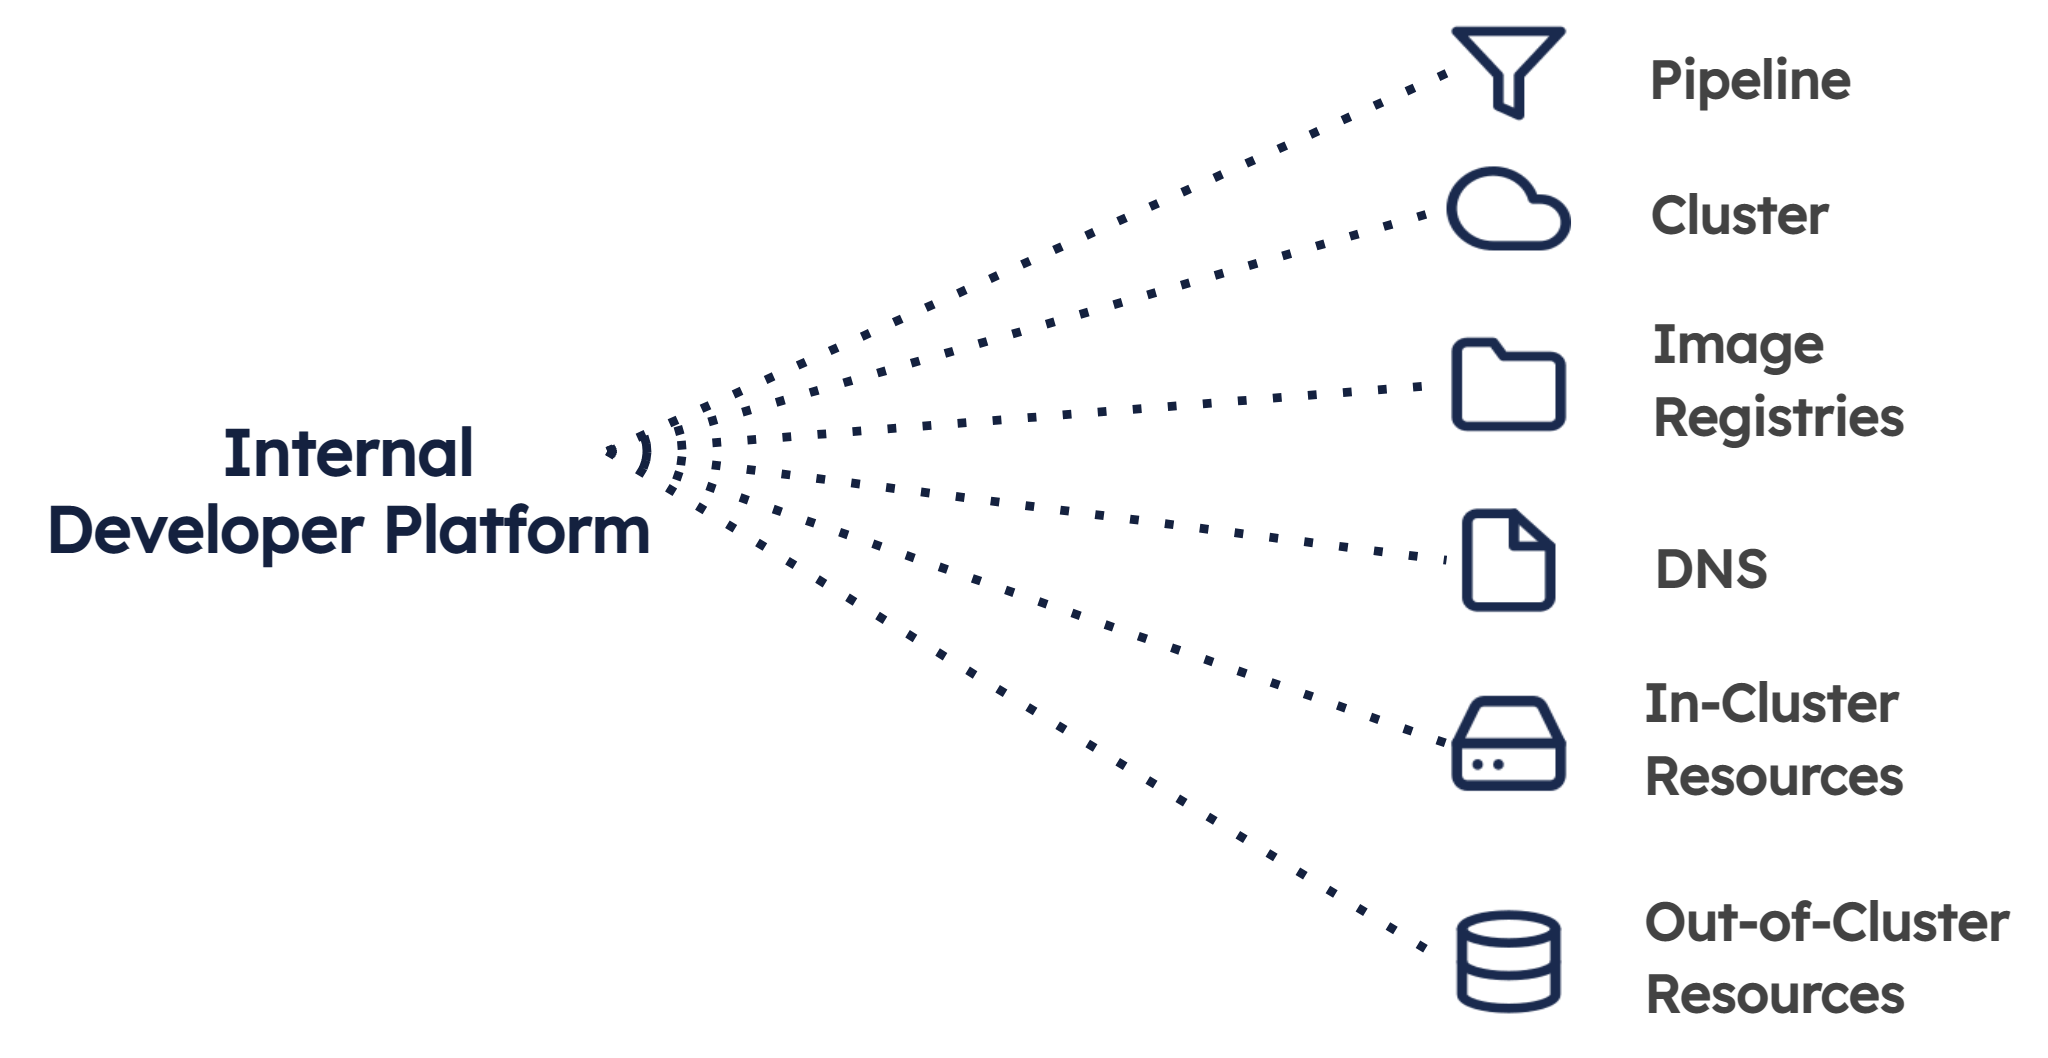 Typical integration points of an Internal Developer Platform